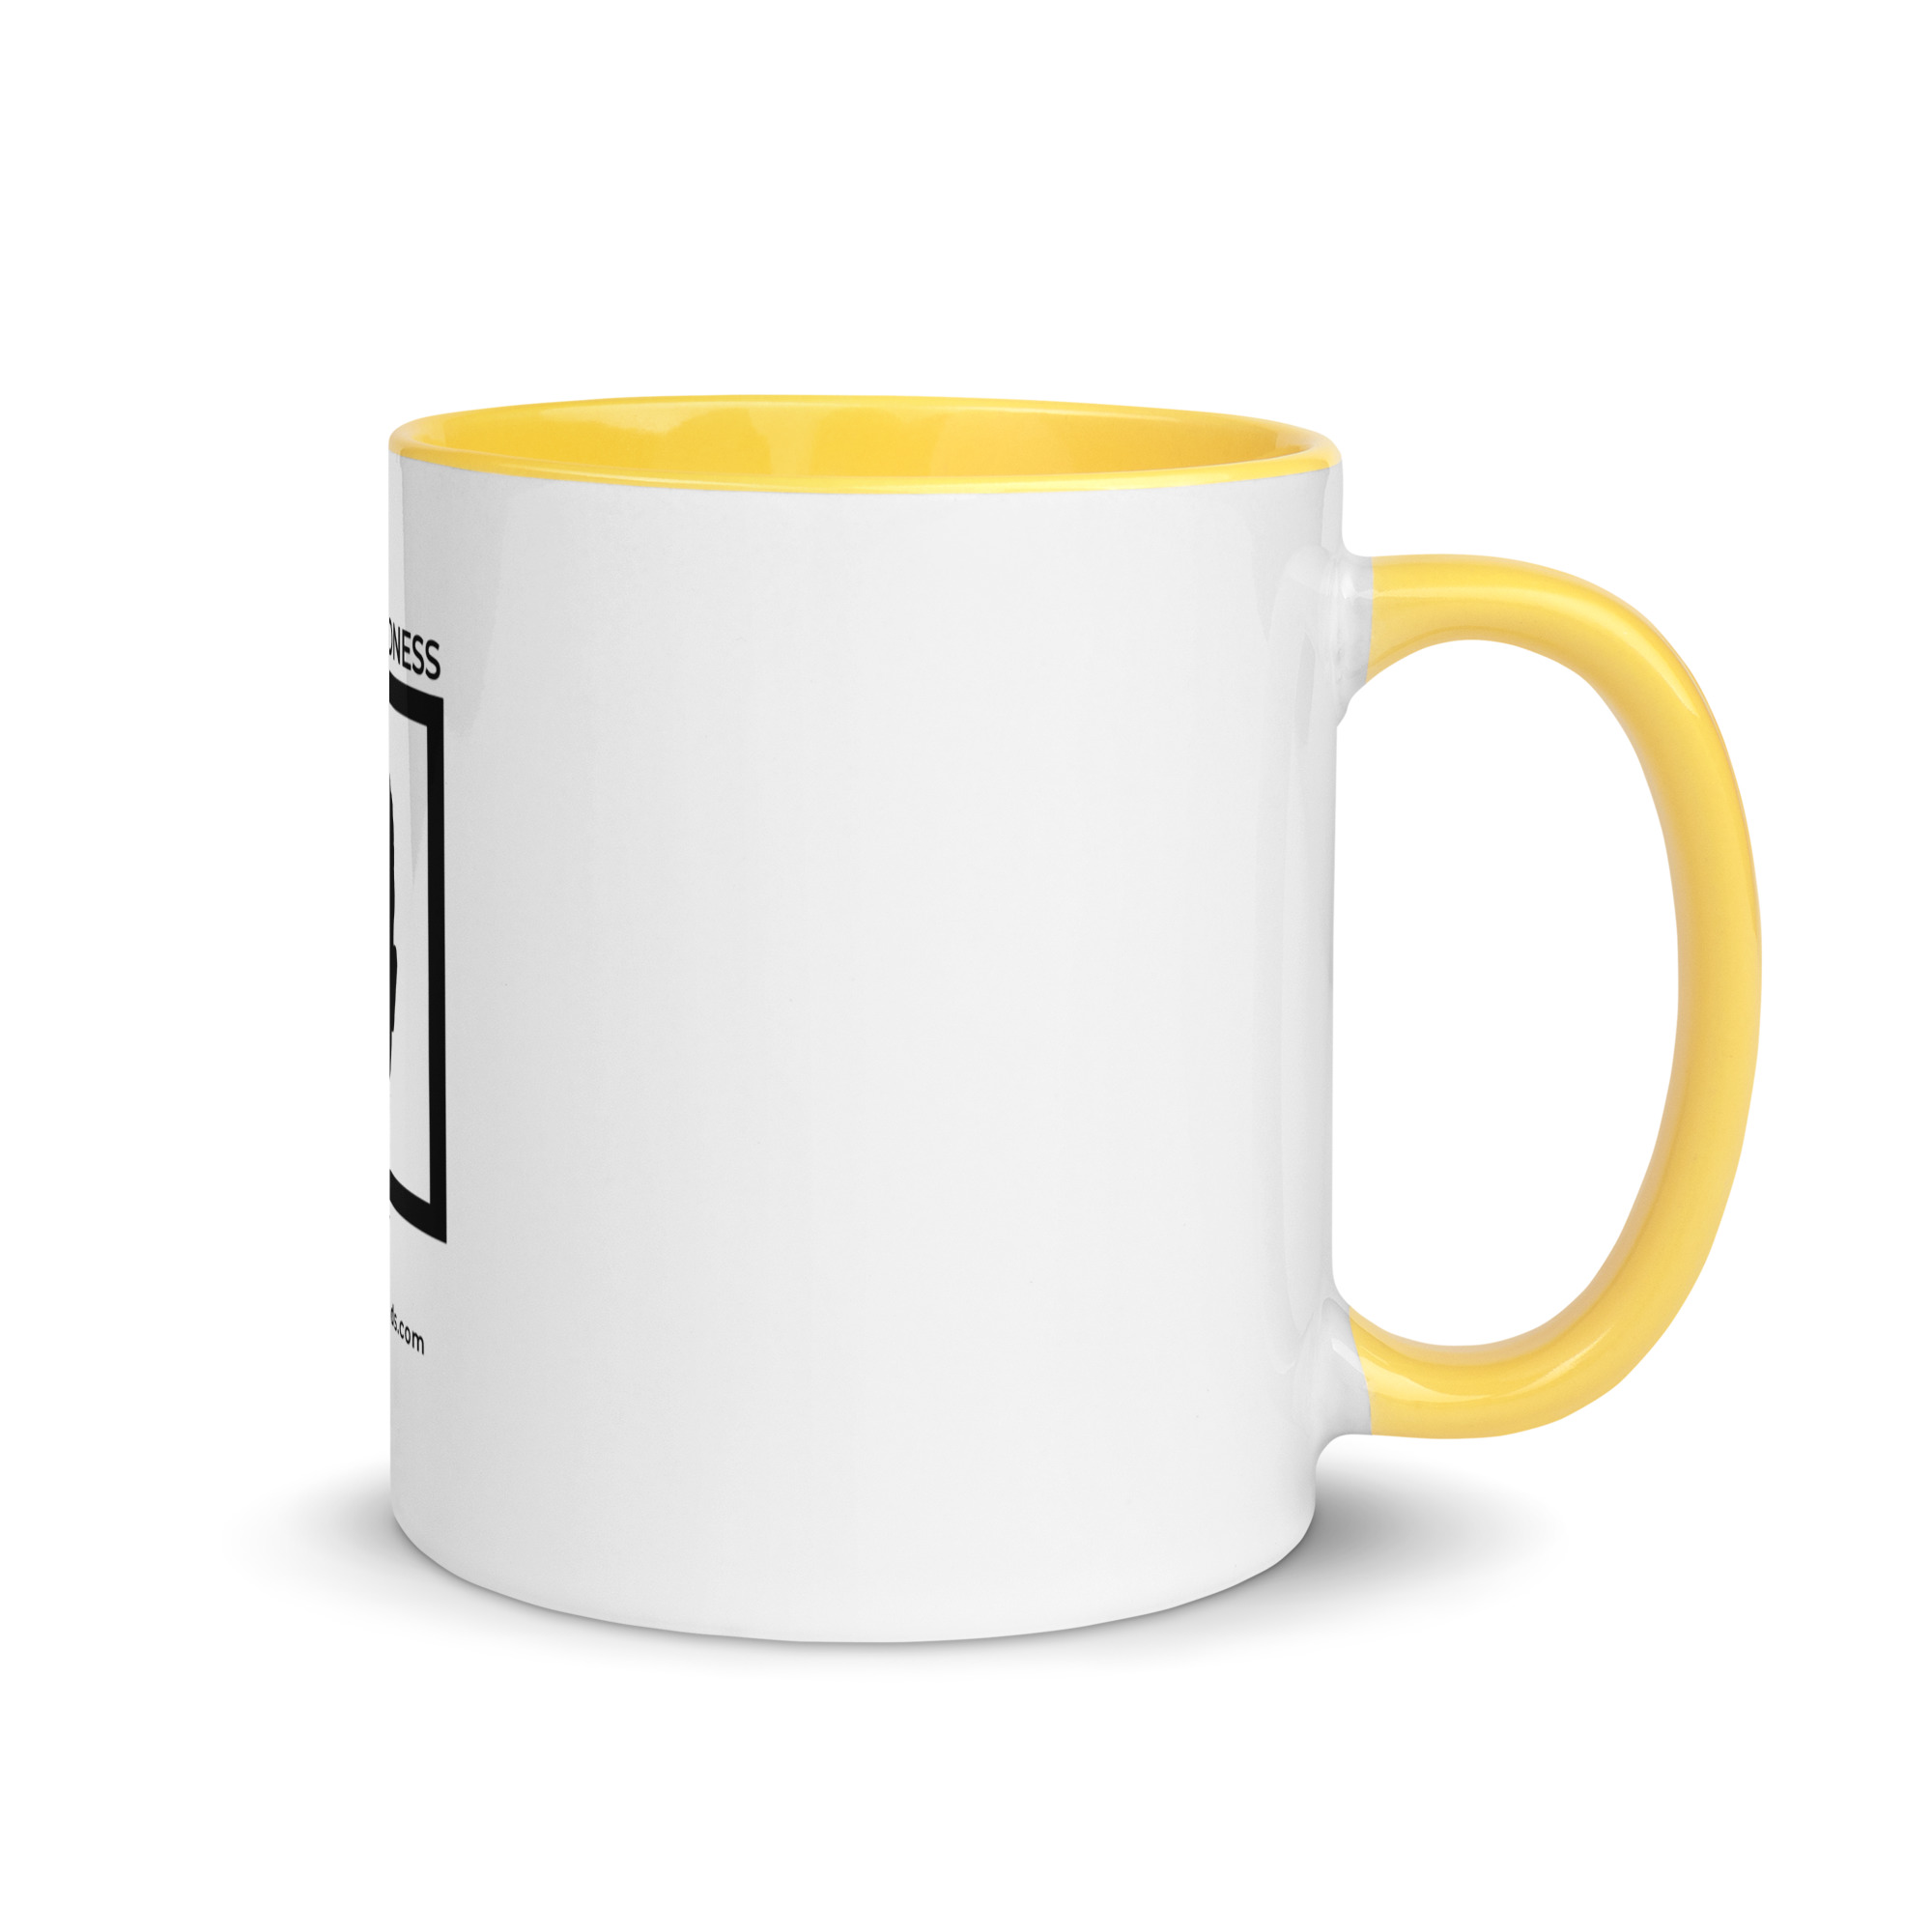 white-ceramic-mug-with-color-inside-yellow-11-oz-right-6522a1a4044f5.jpg